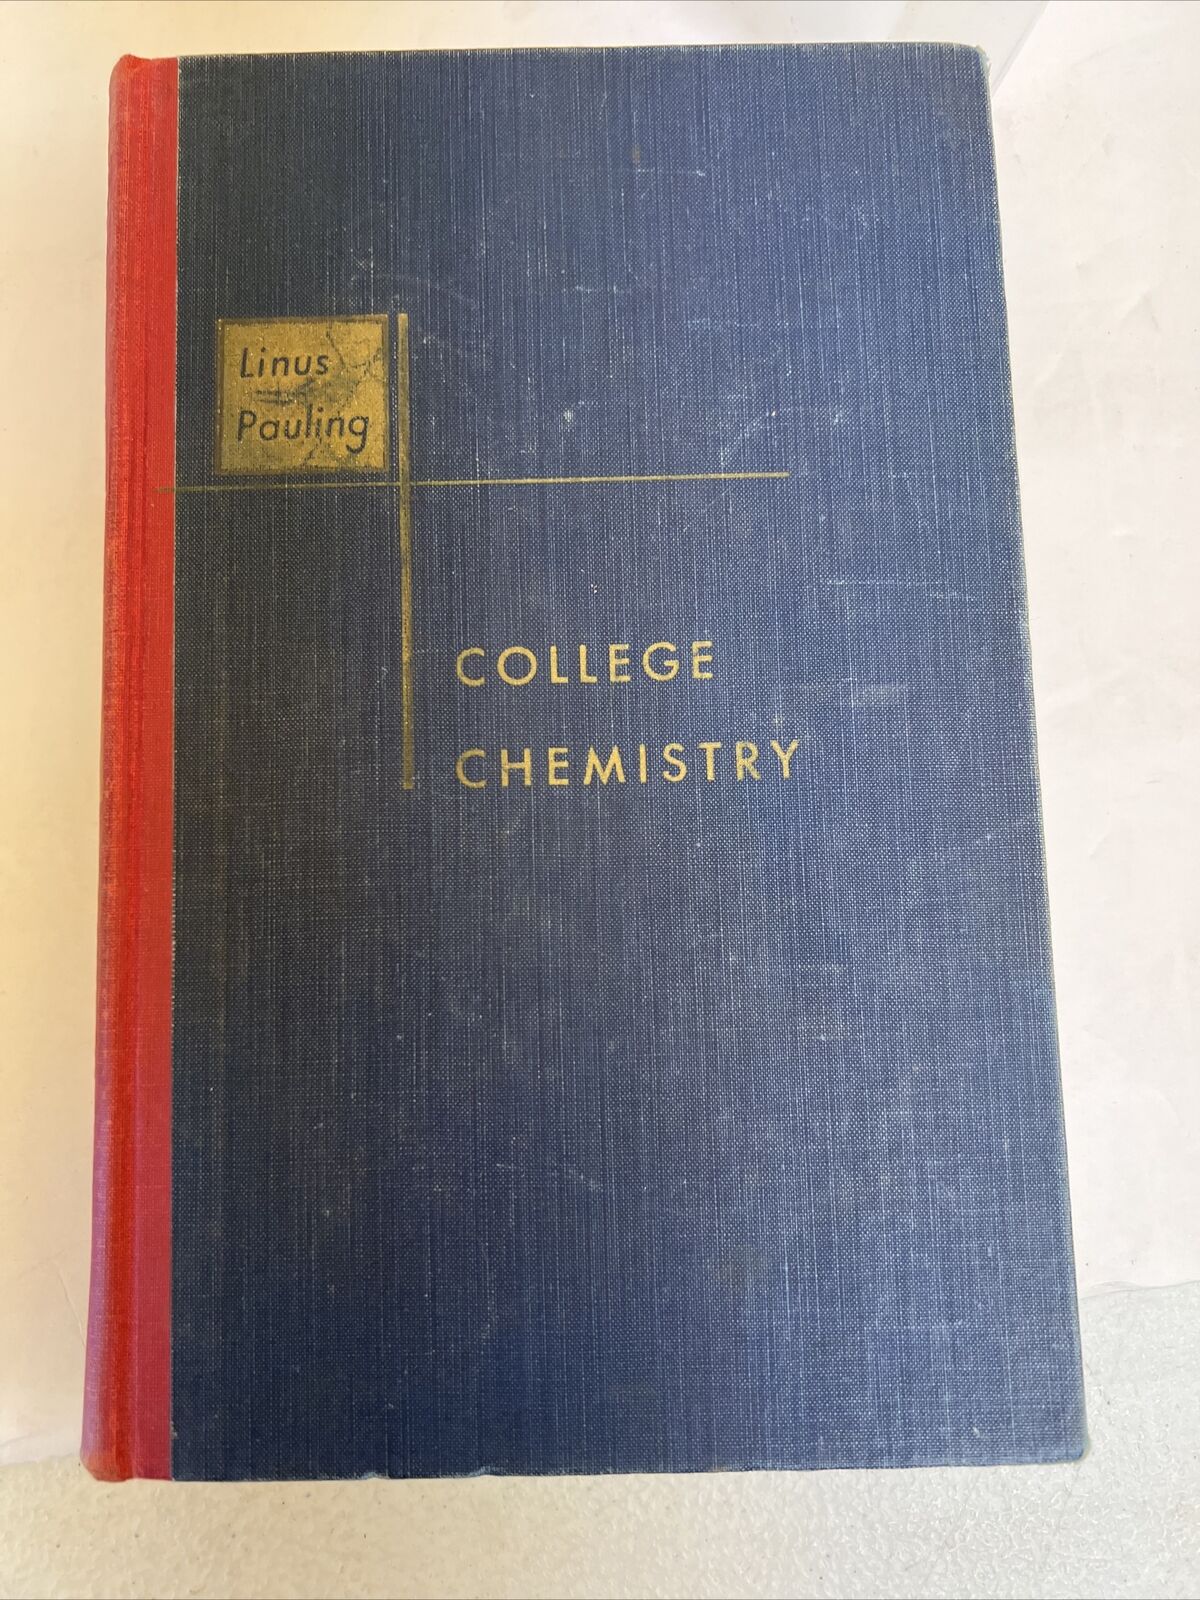 1951 College Chemistry Book